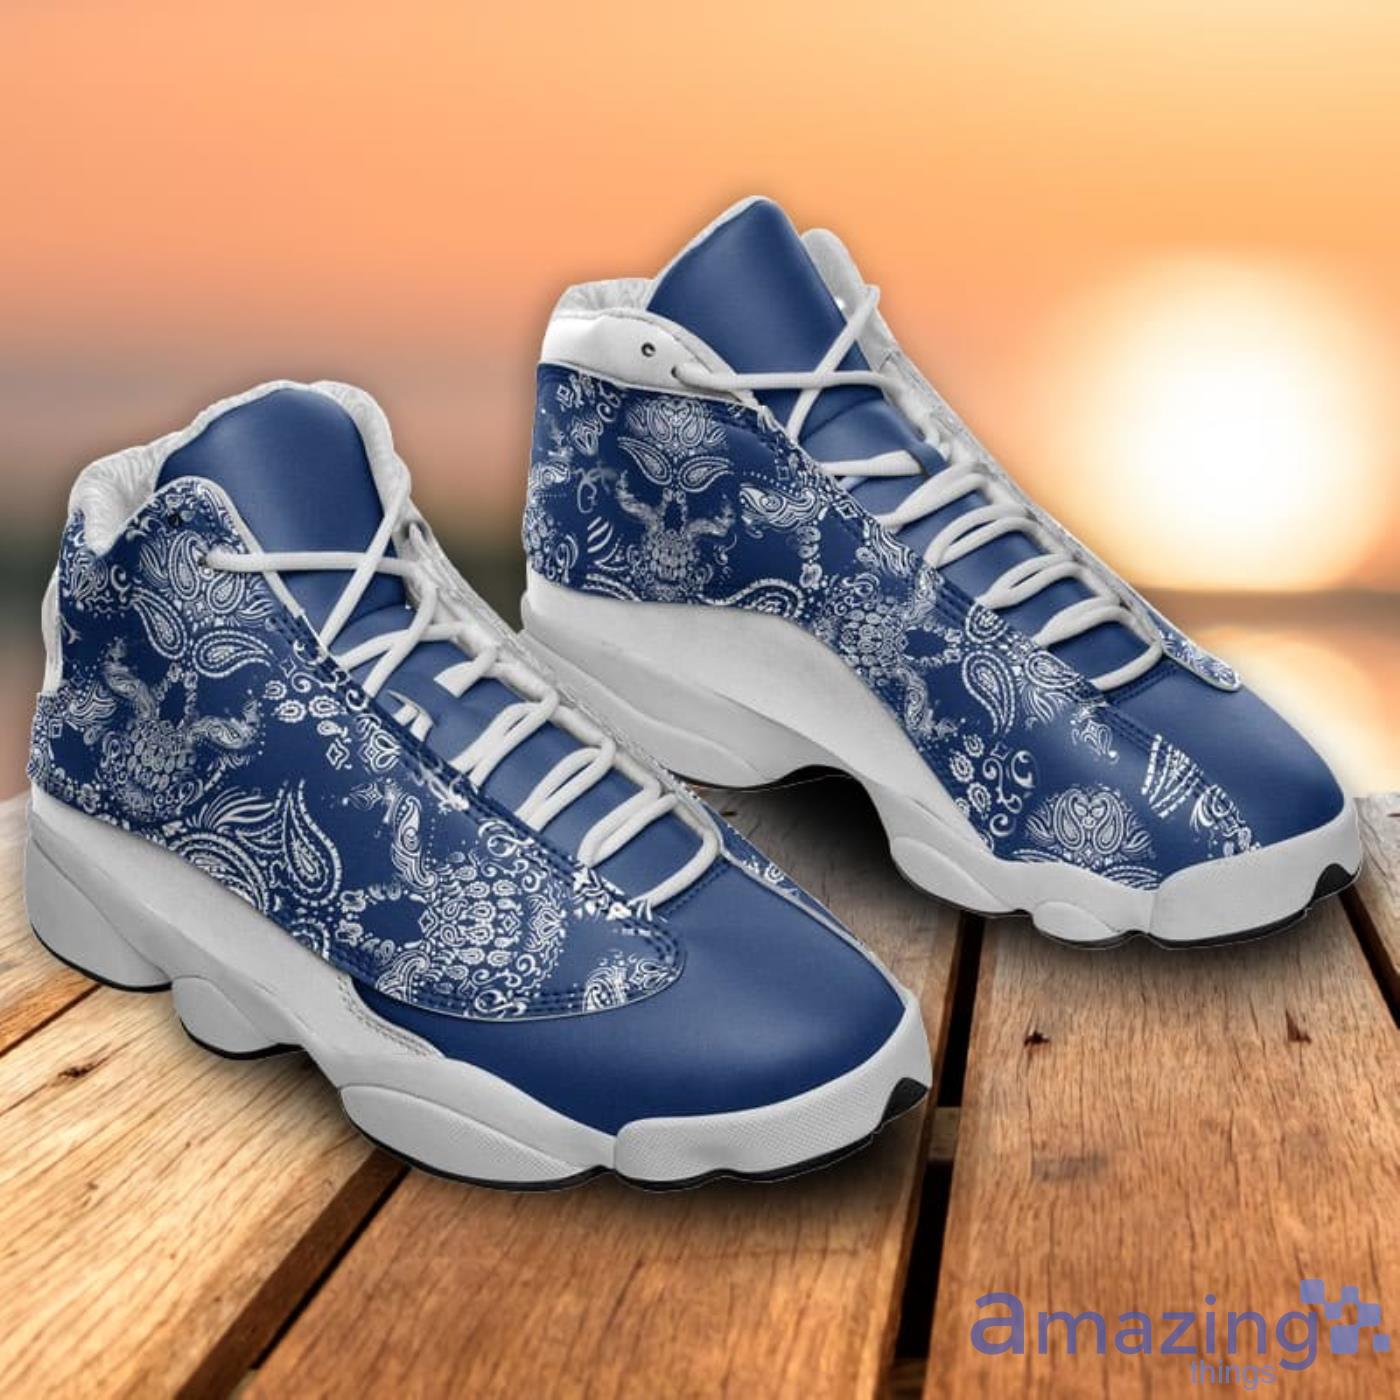 Gucci blue air jordan 13 sneaker shoes type 02#airjordan#shoes in